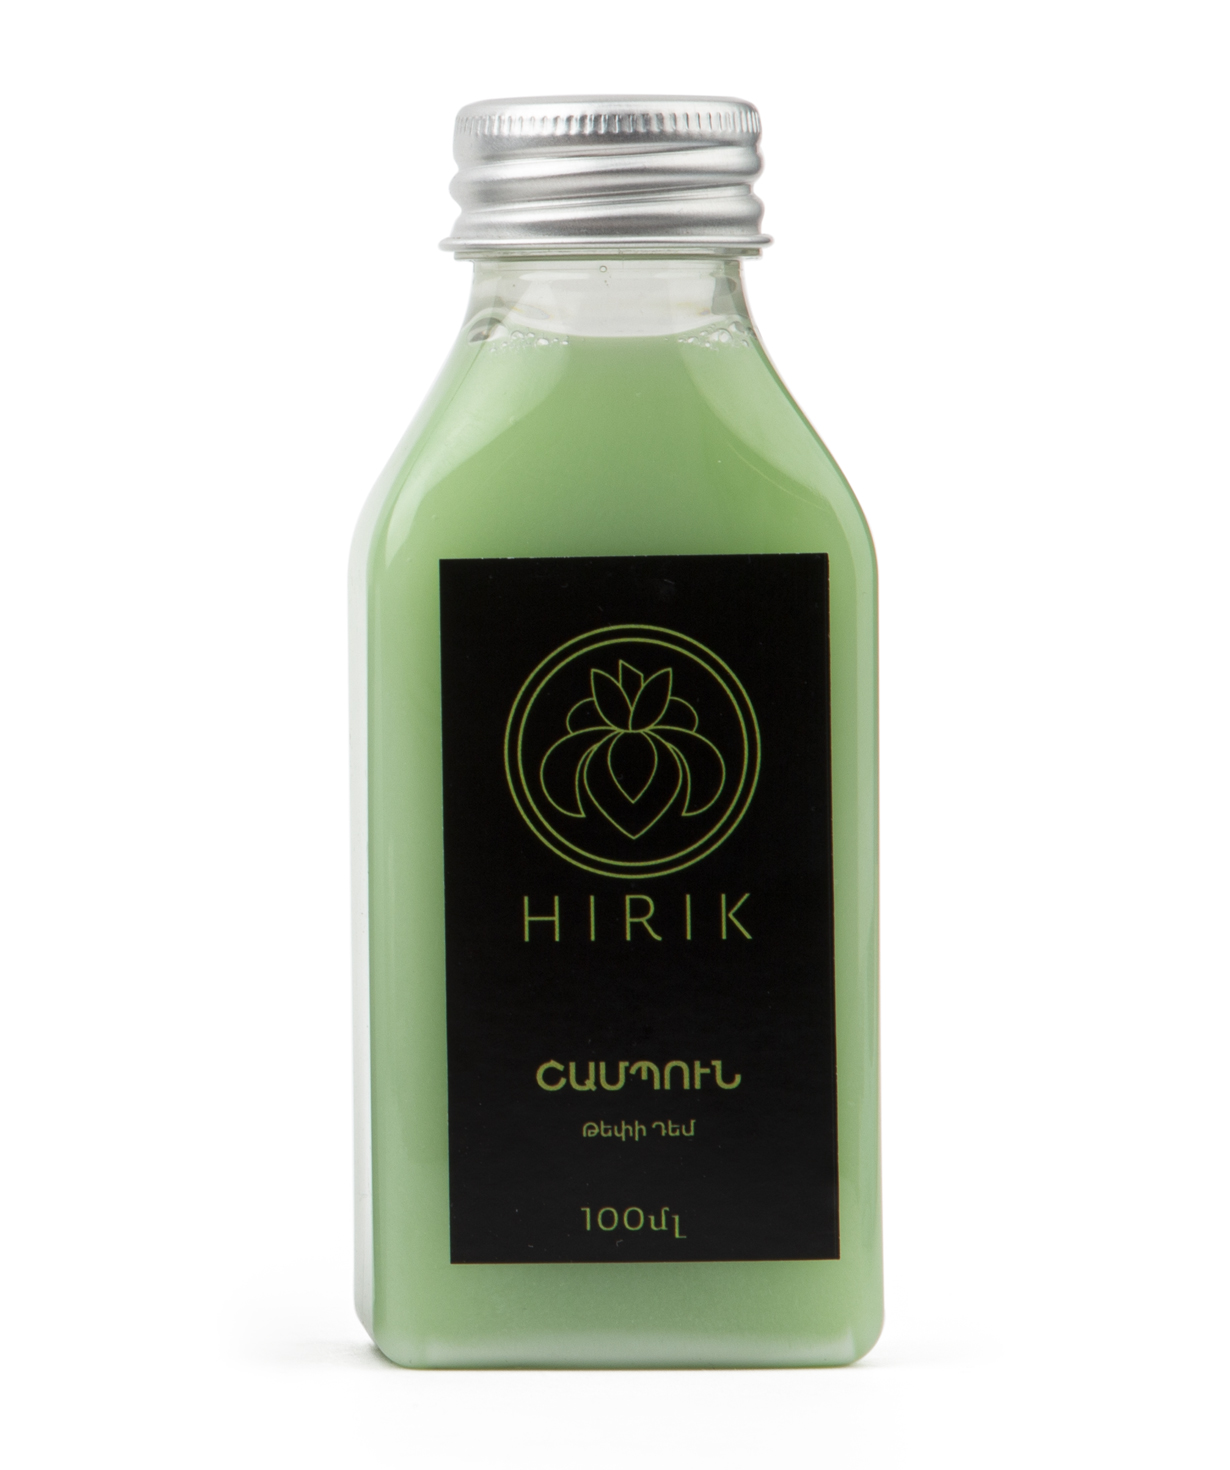 Shampoo `Hirik Cosmetics` with extracts of hemp and chamomile